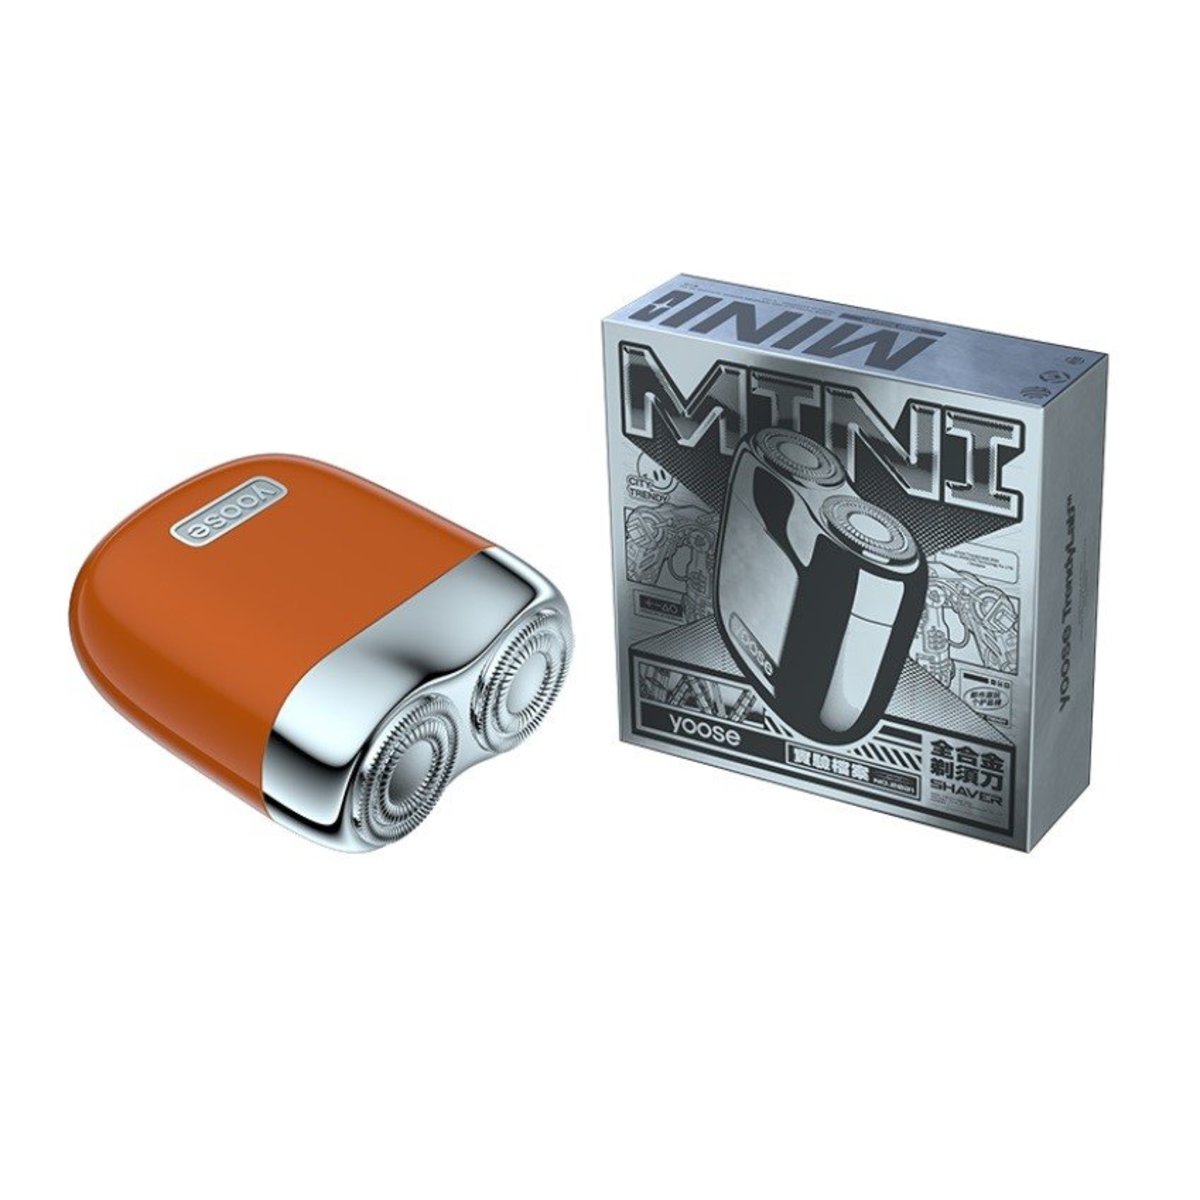 YOOSE - MINI Portable Electric Shaver - Orange [Licensed in Hong Kong]